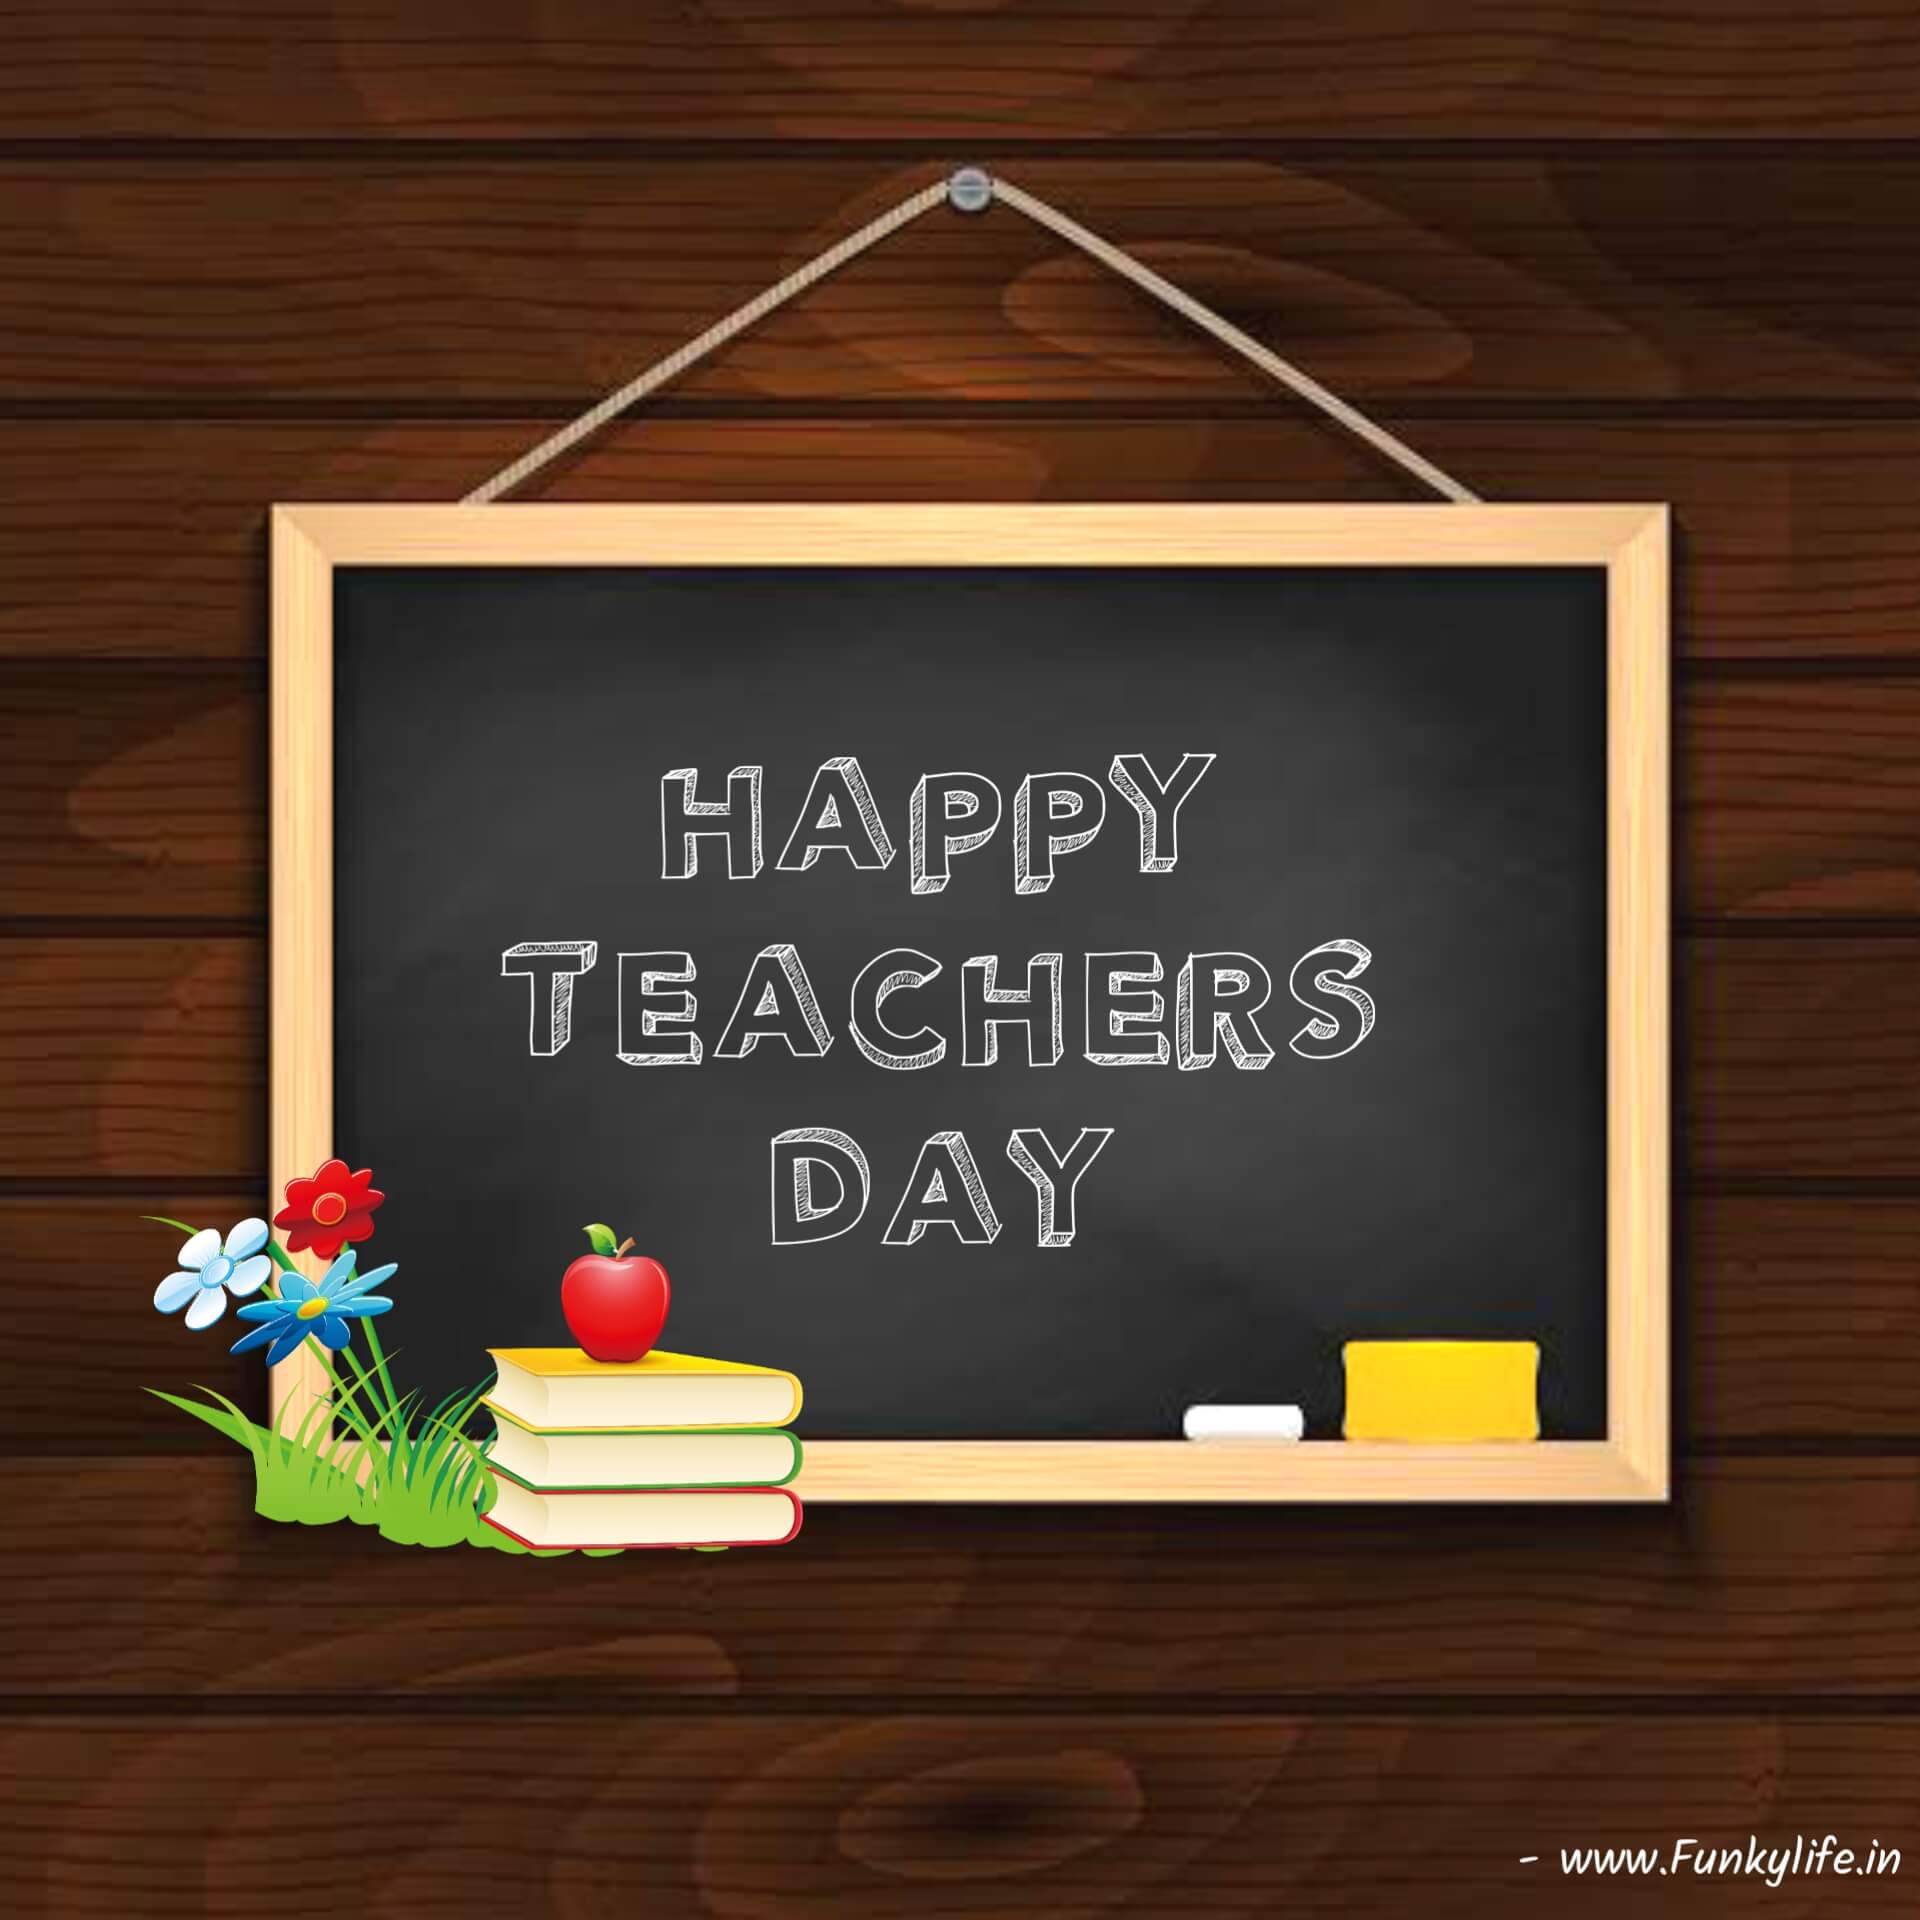 Happy Teachers Day Wishes Image